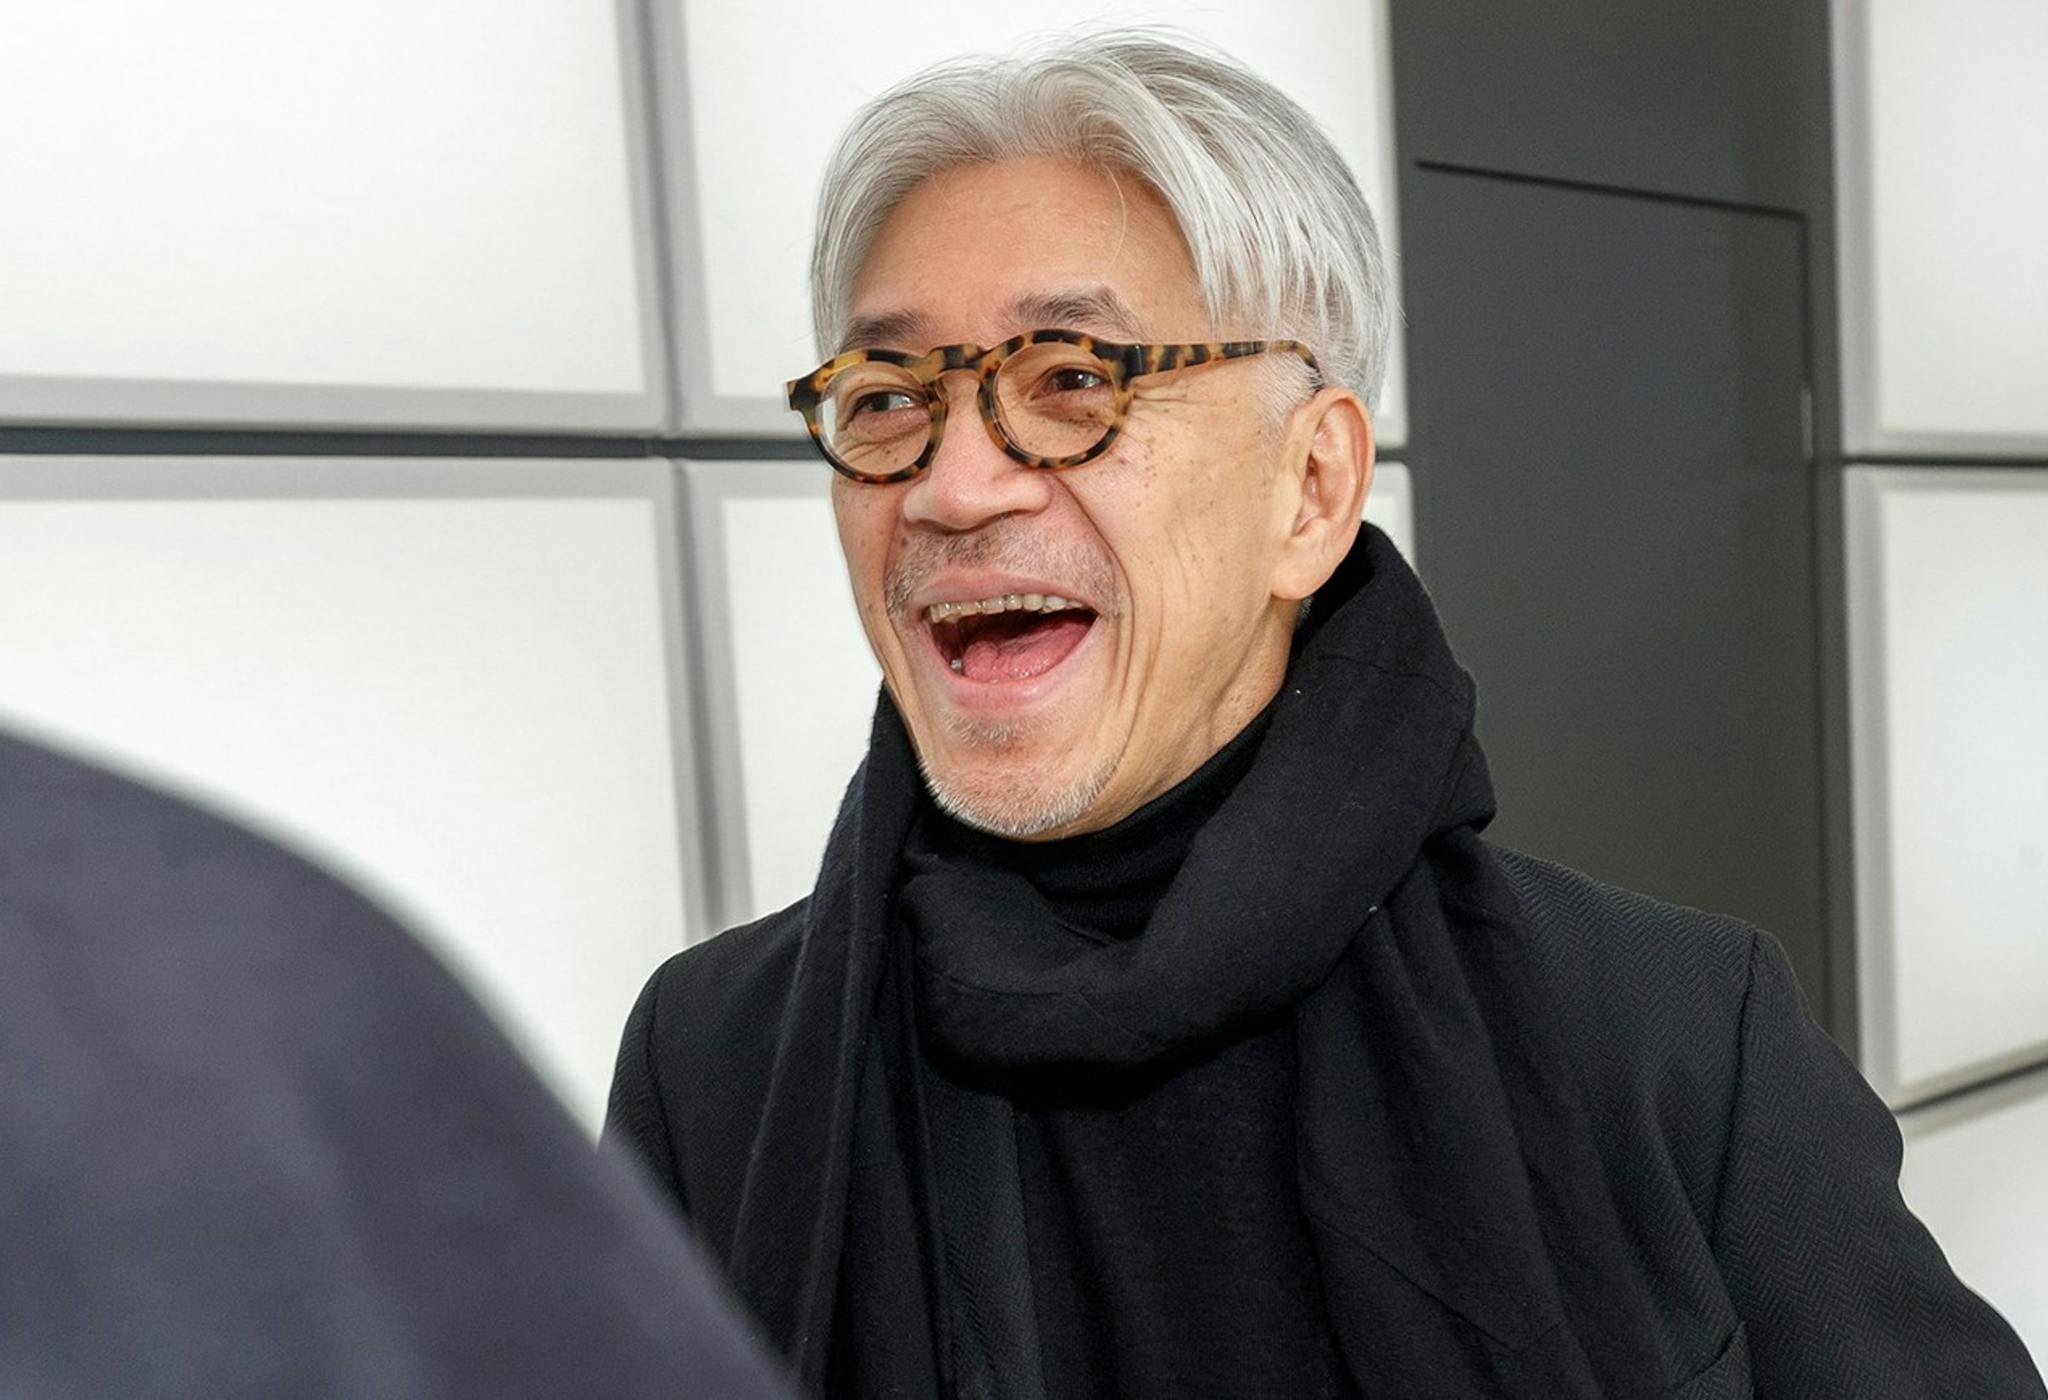 Ryuichi Sakamoto, pianista y compositor japonés, en la Berlinale del año 2018, pianista y compositor japonés, en la Berlinale del año 2018